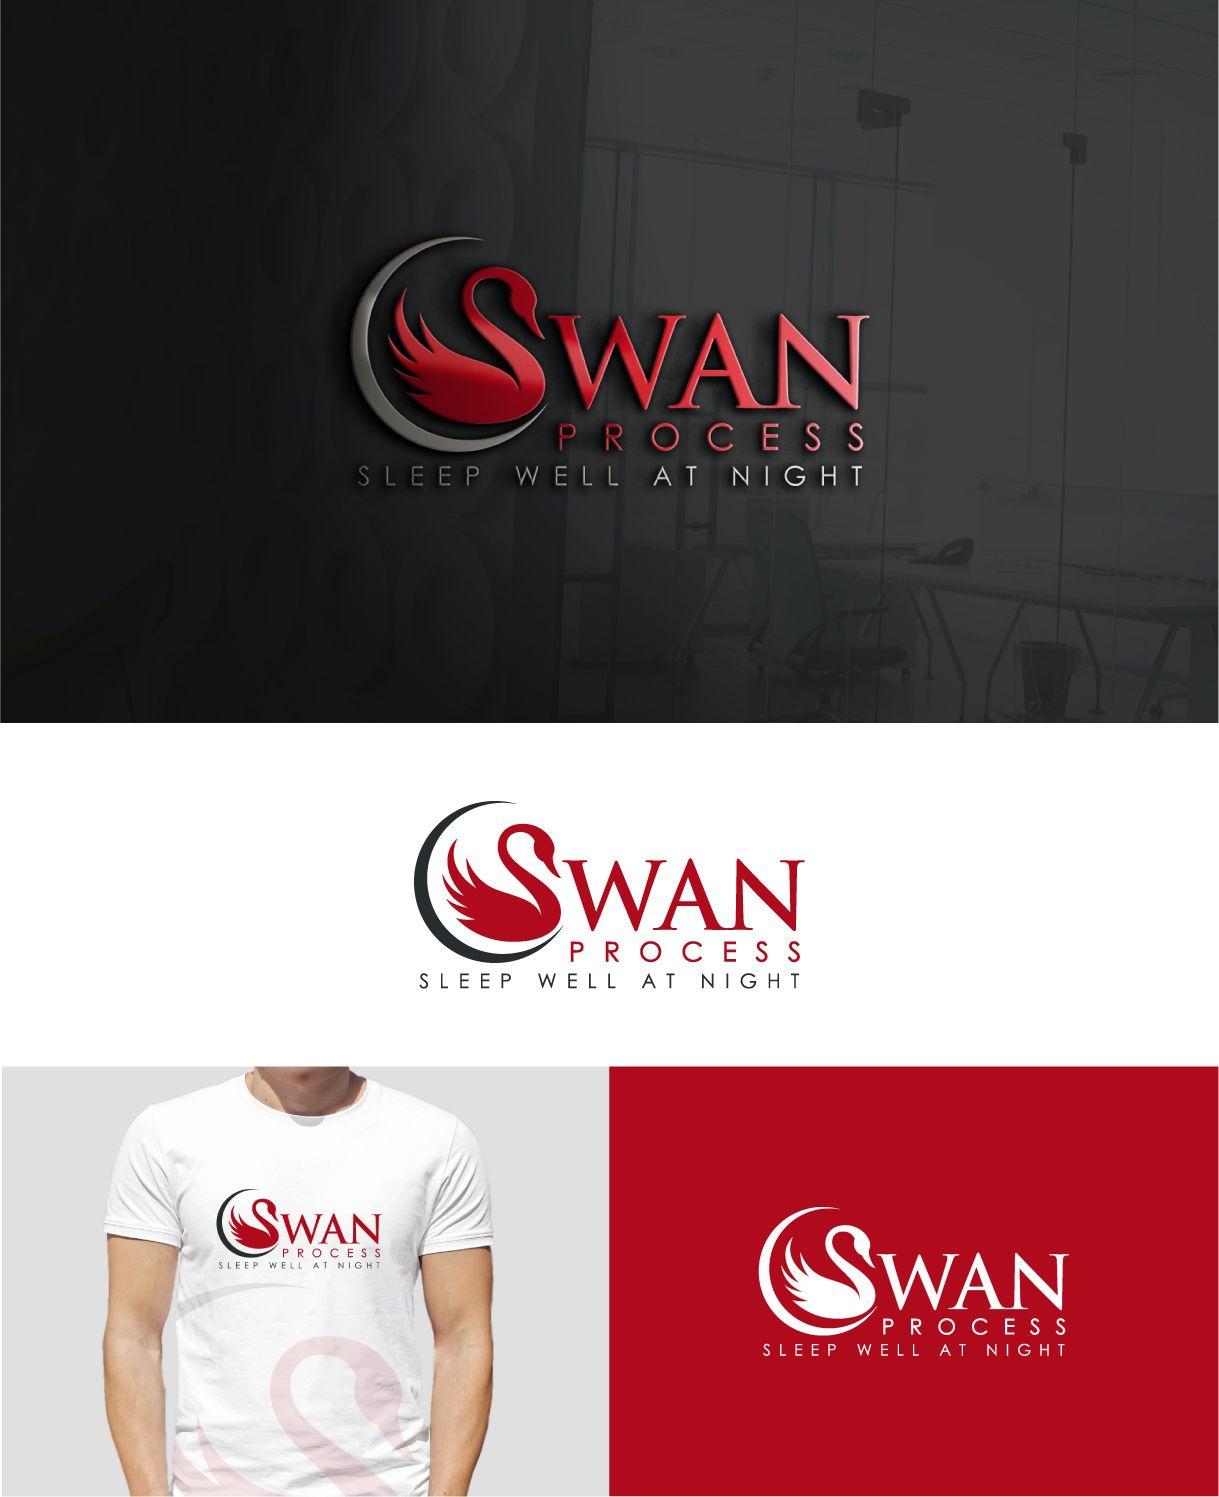 Red Swan Company Logo - Logo Design for SWAN Process by Grazdavoda. Design